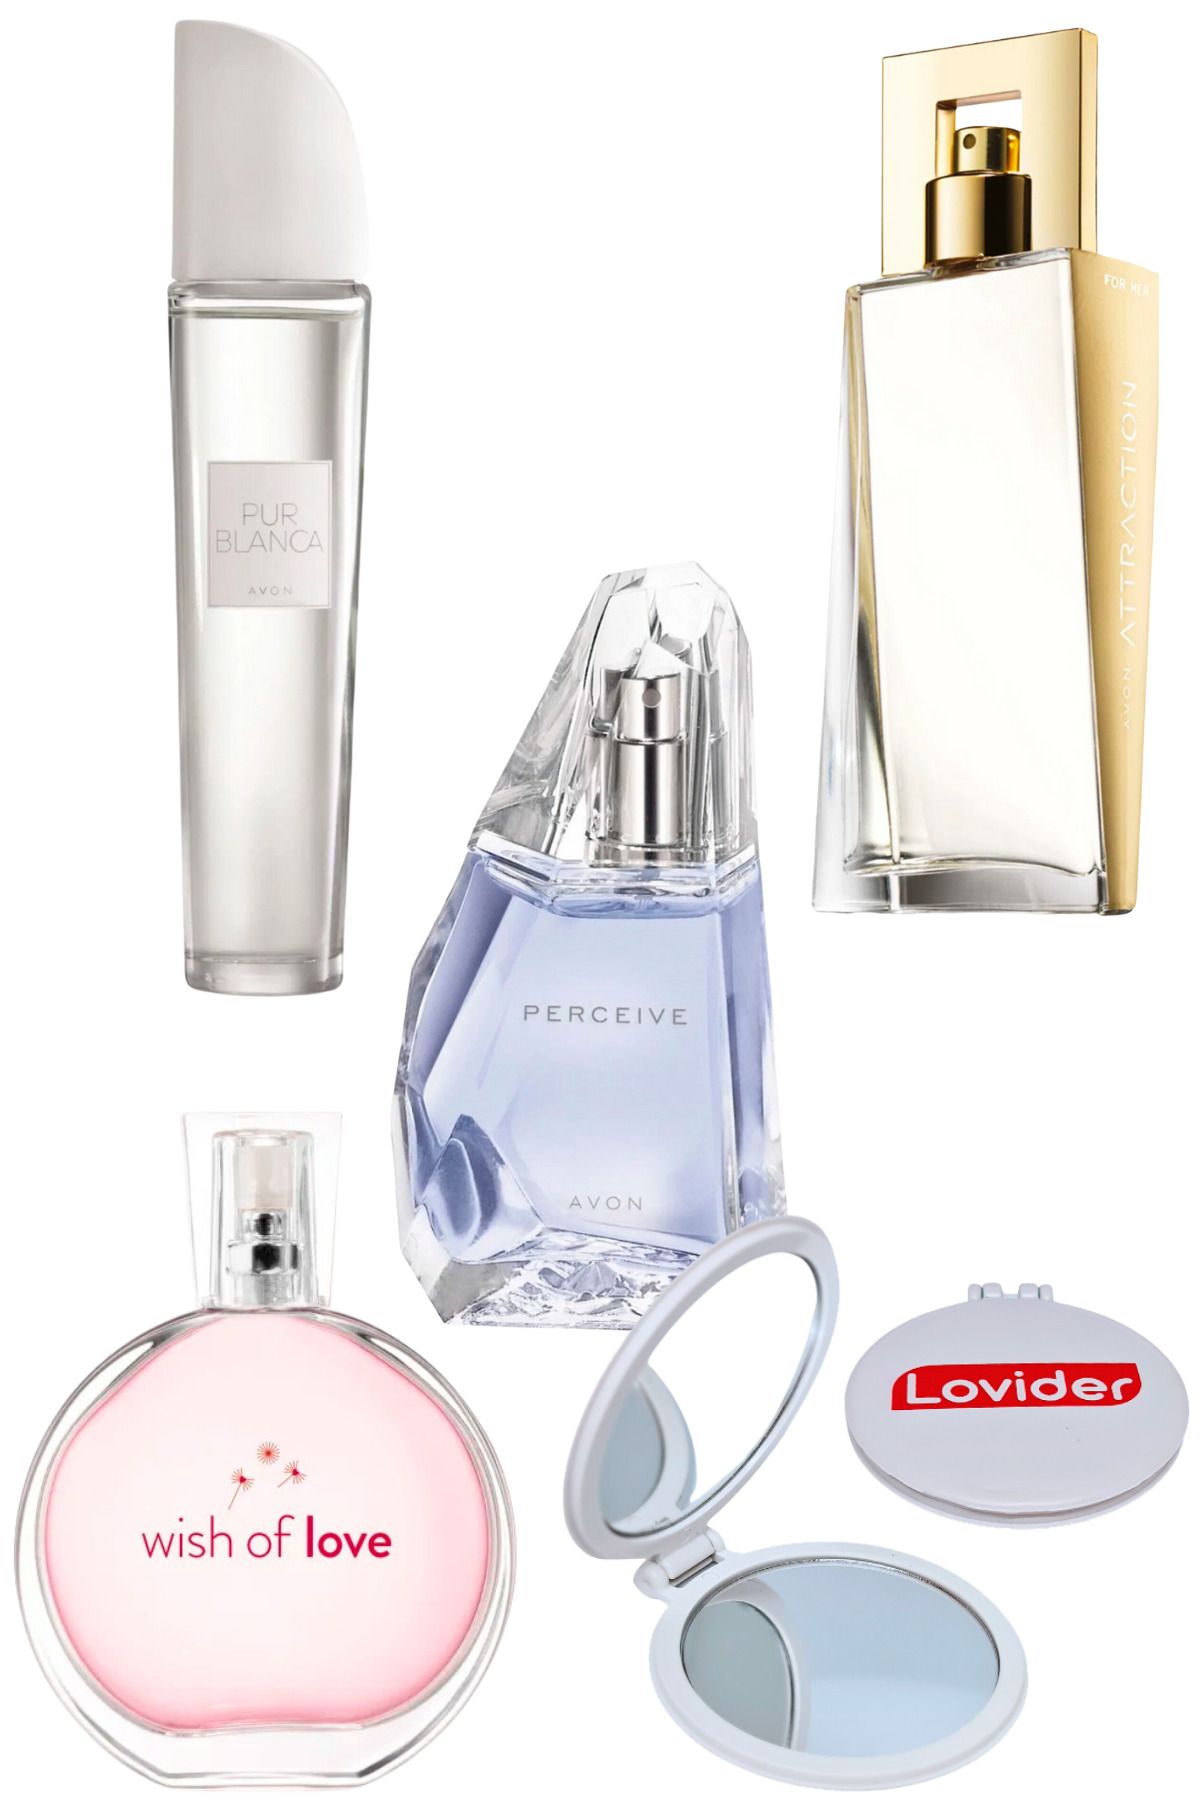 Avon Kadın Parfüm Seti; Pur Blanca + Wish Of Love + Perceive + Attraction + Lovider Cep Aynası